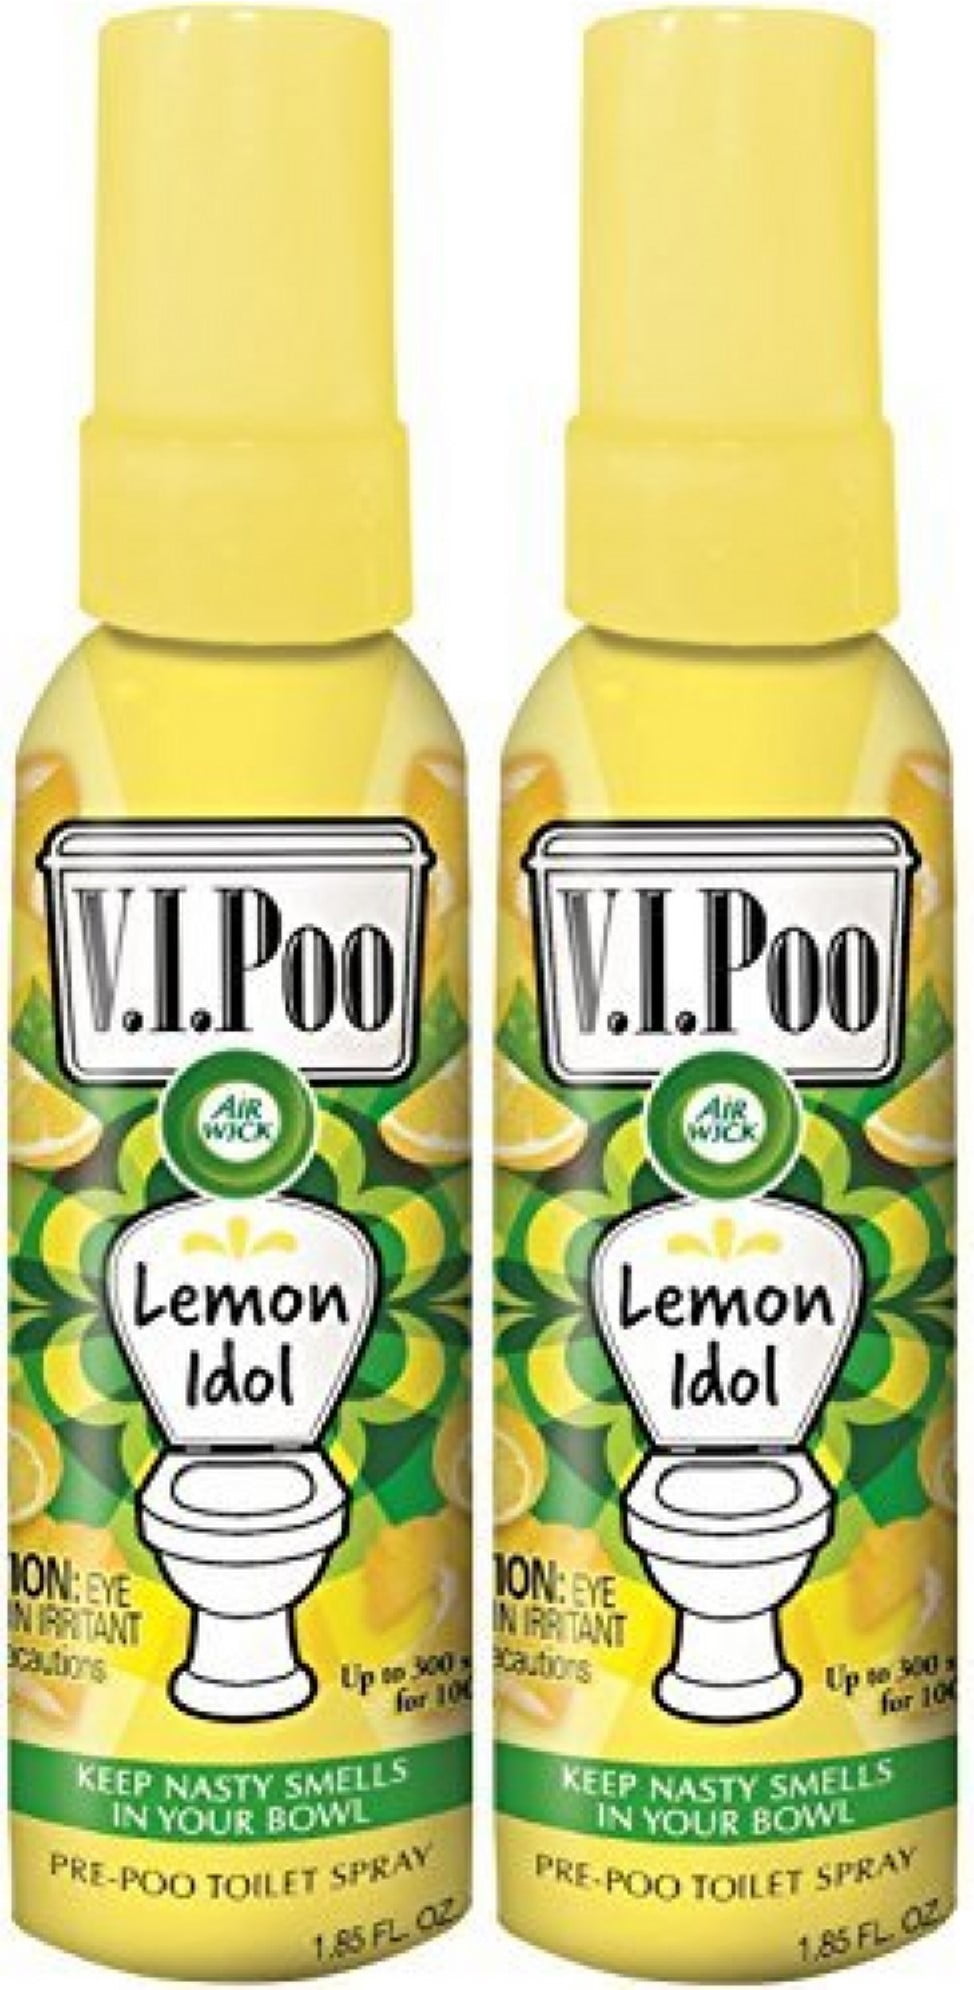 Air Wick VIPoo Toilet Perfume Fruity Pin-Up 1.9 Oz. (Pack of 6)